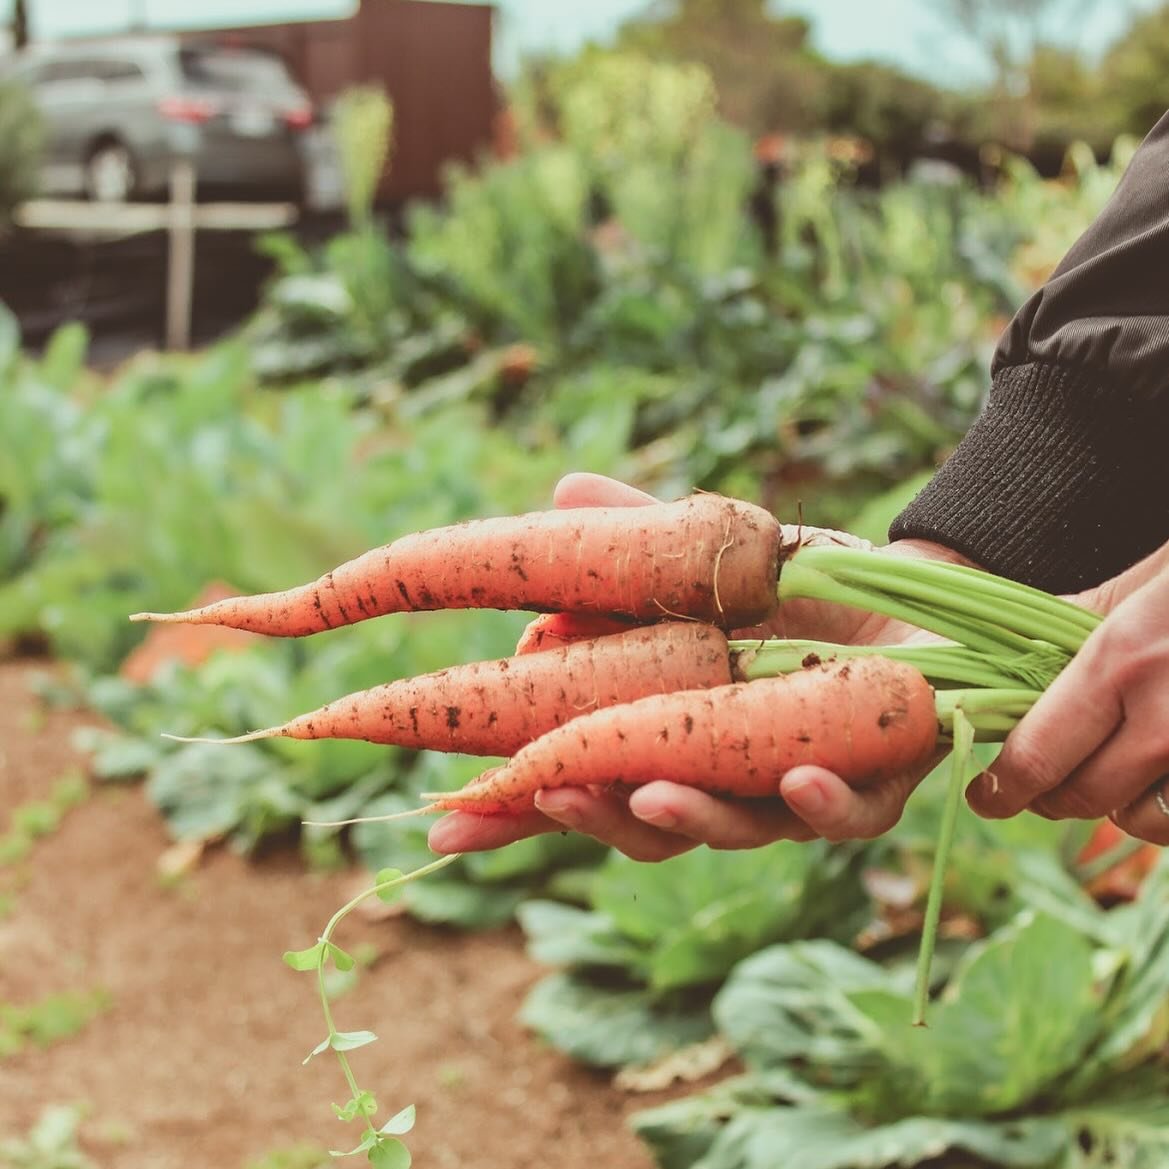 Freshies! #regenerativefarming #carrots

Photo: @bigfishphotography